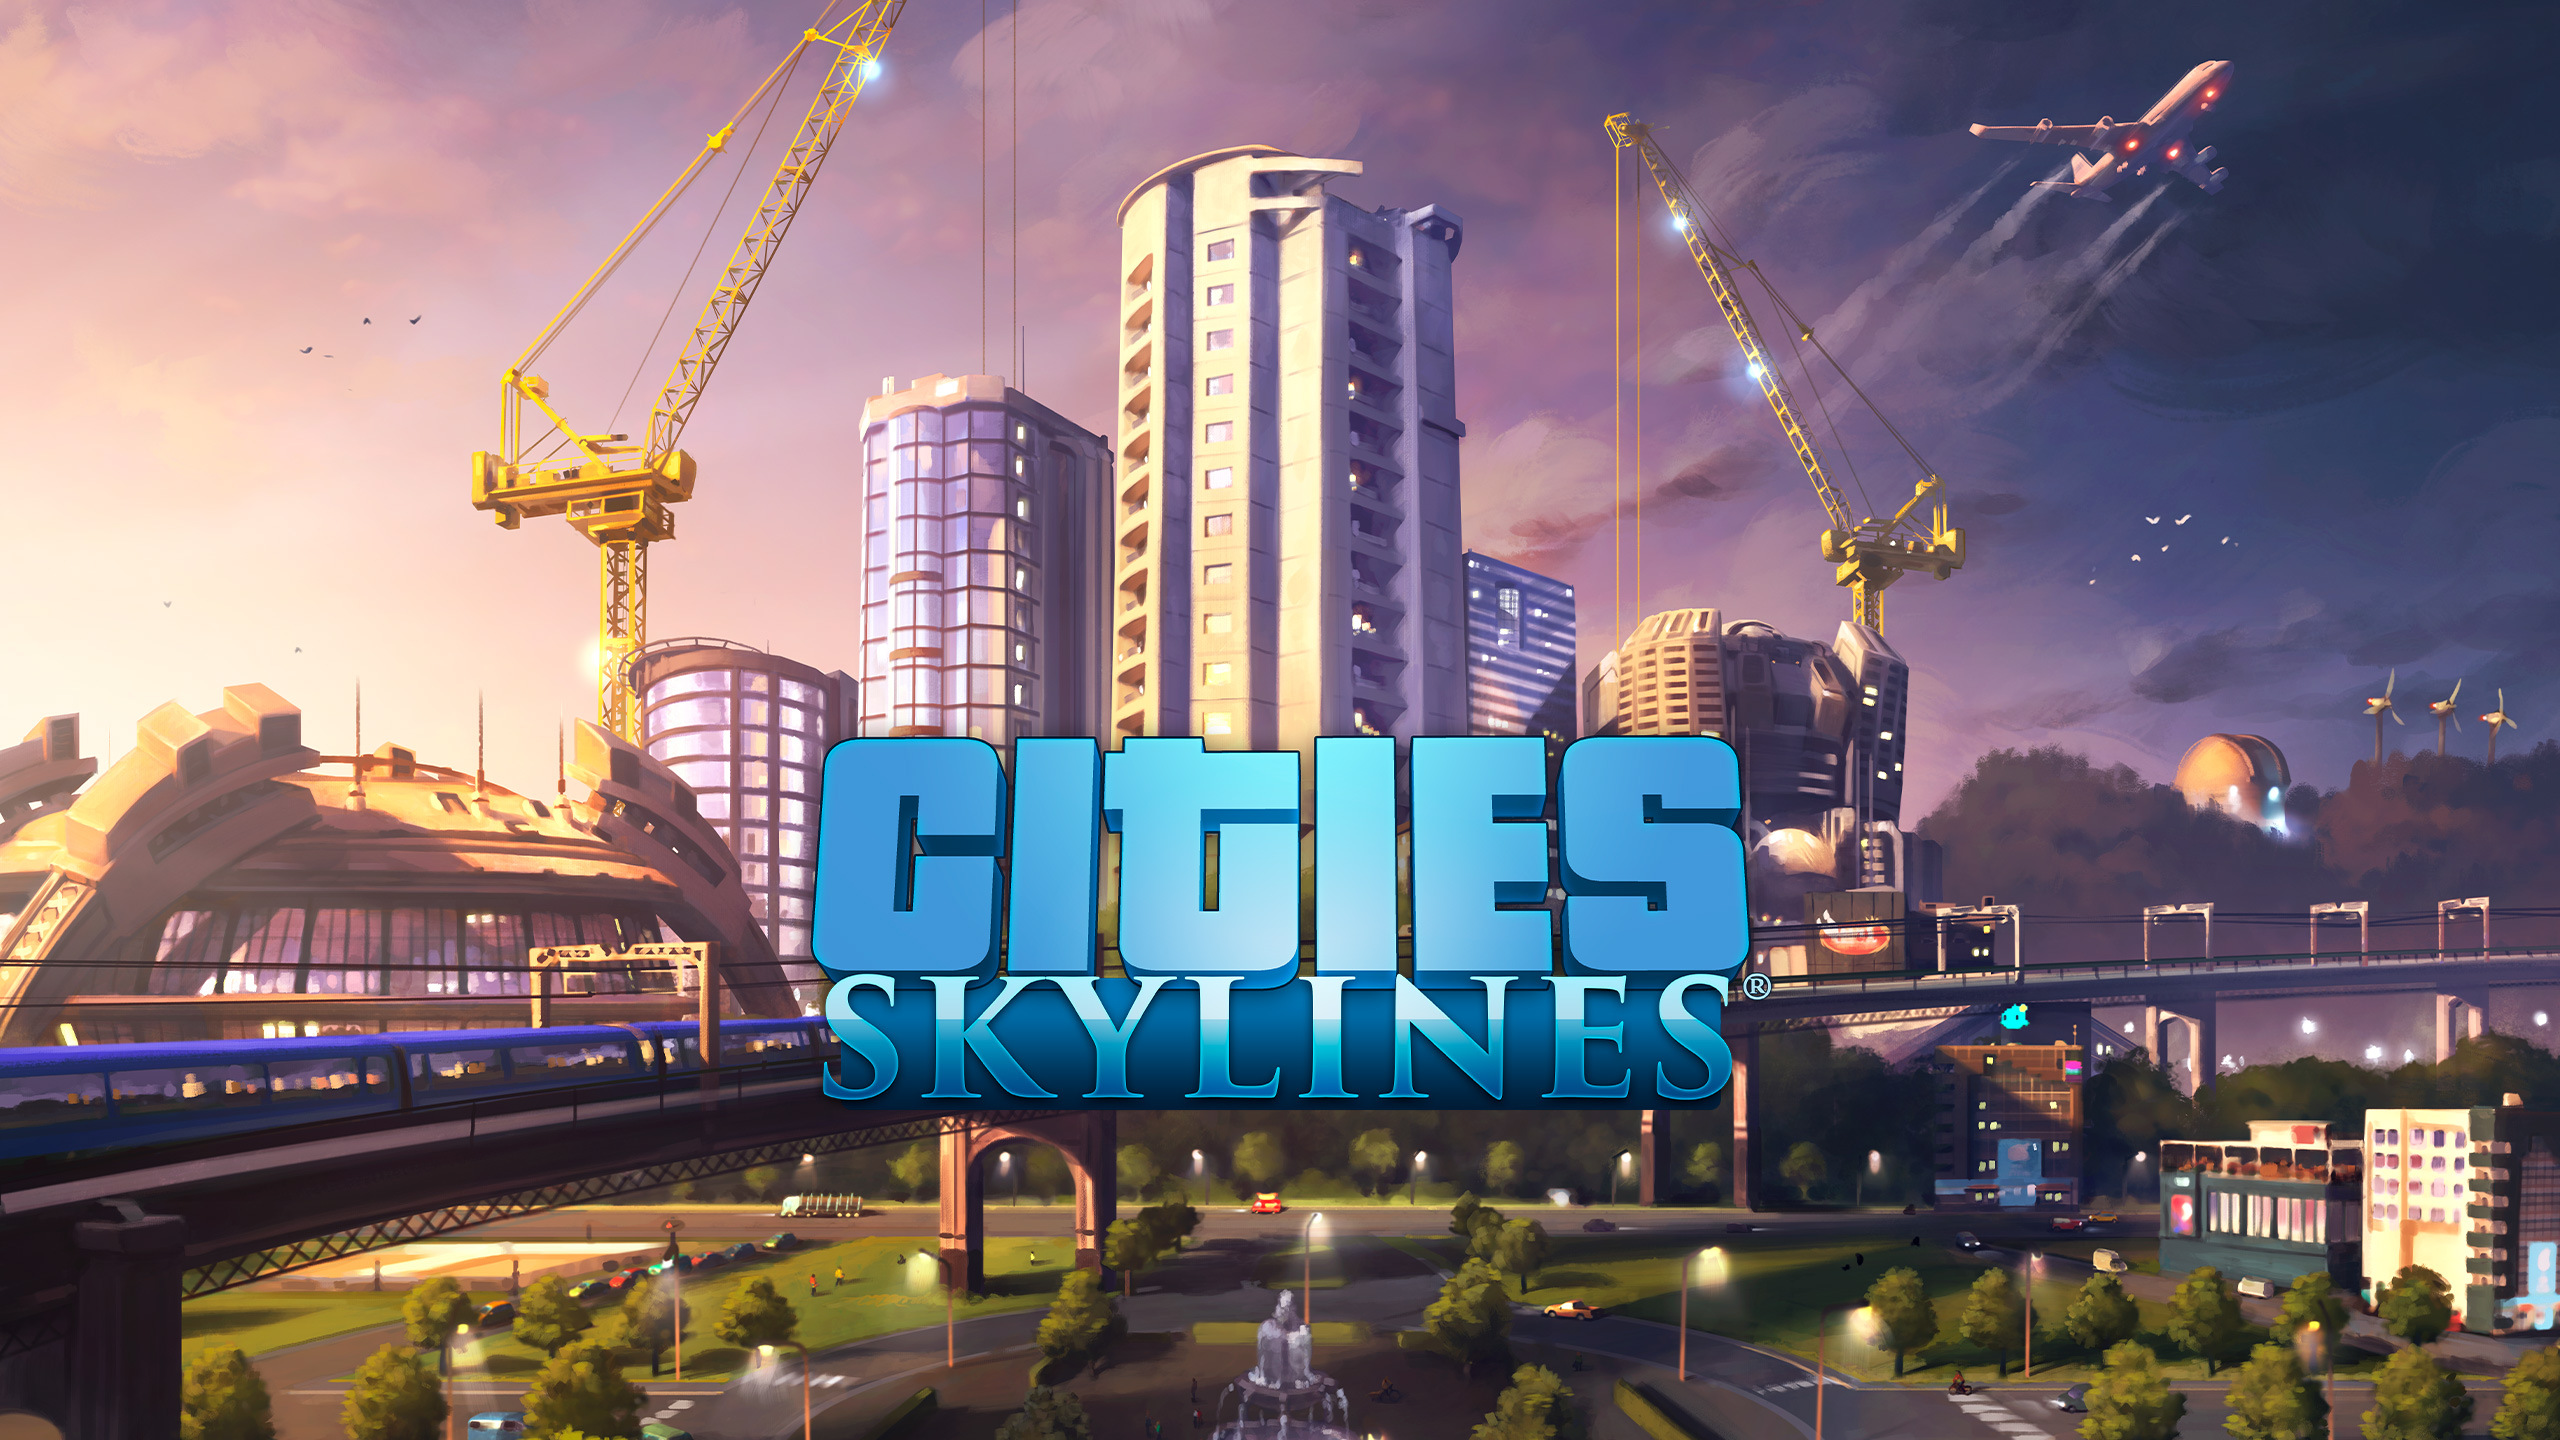 gra cities: skylines za darmo w epic games store